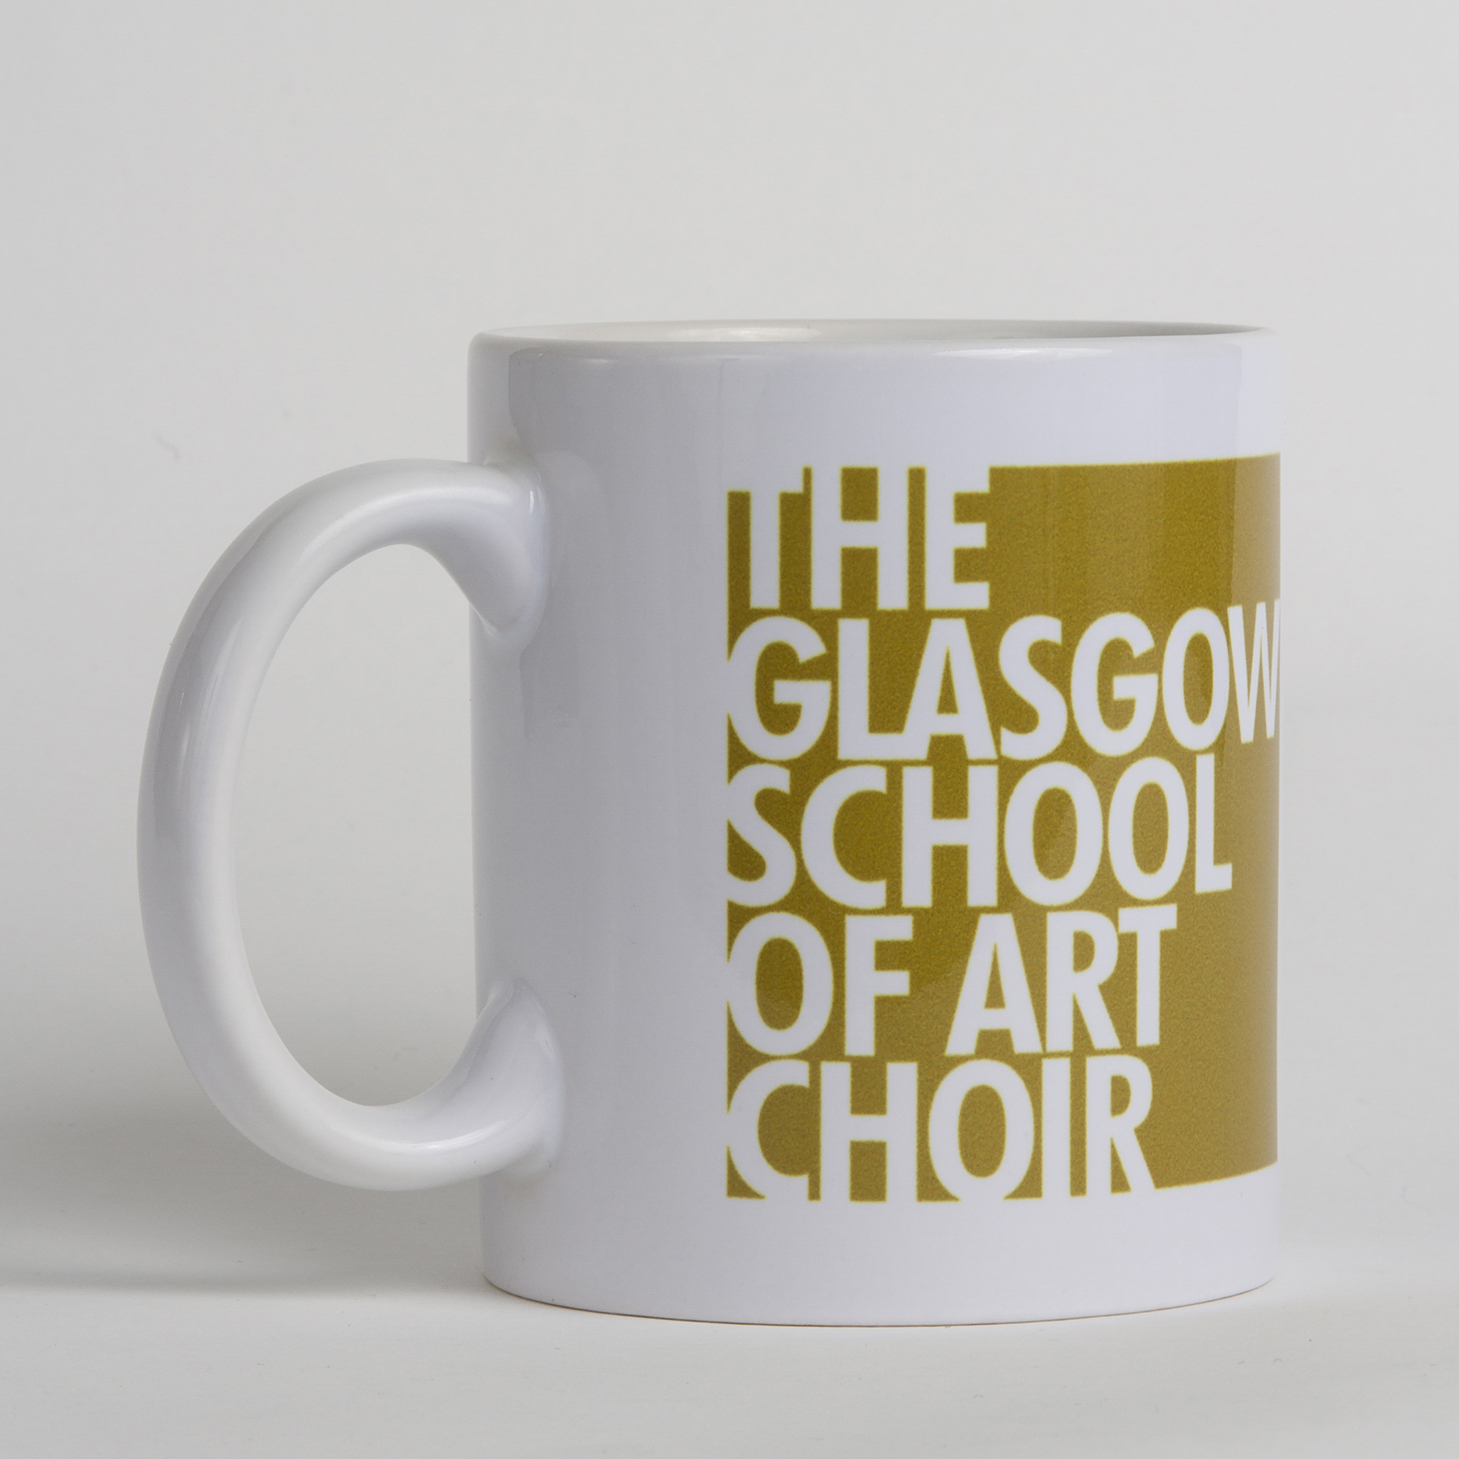 GSA Choir souvenir mug